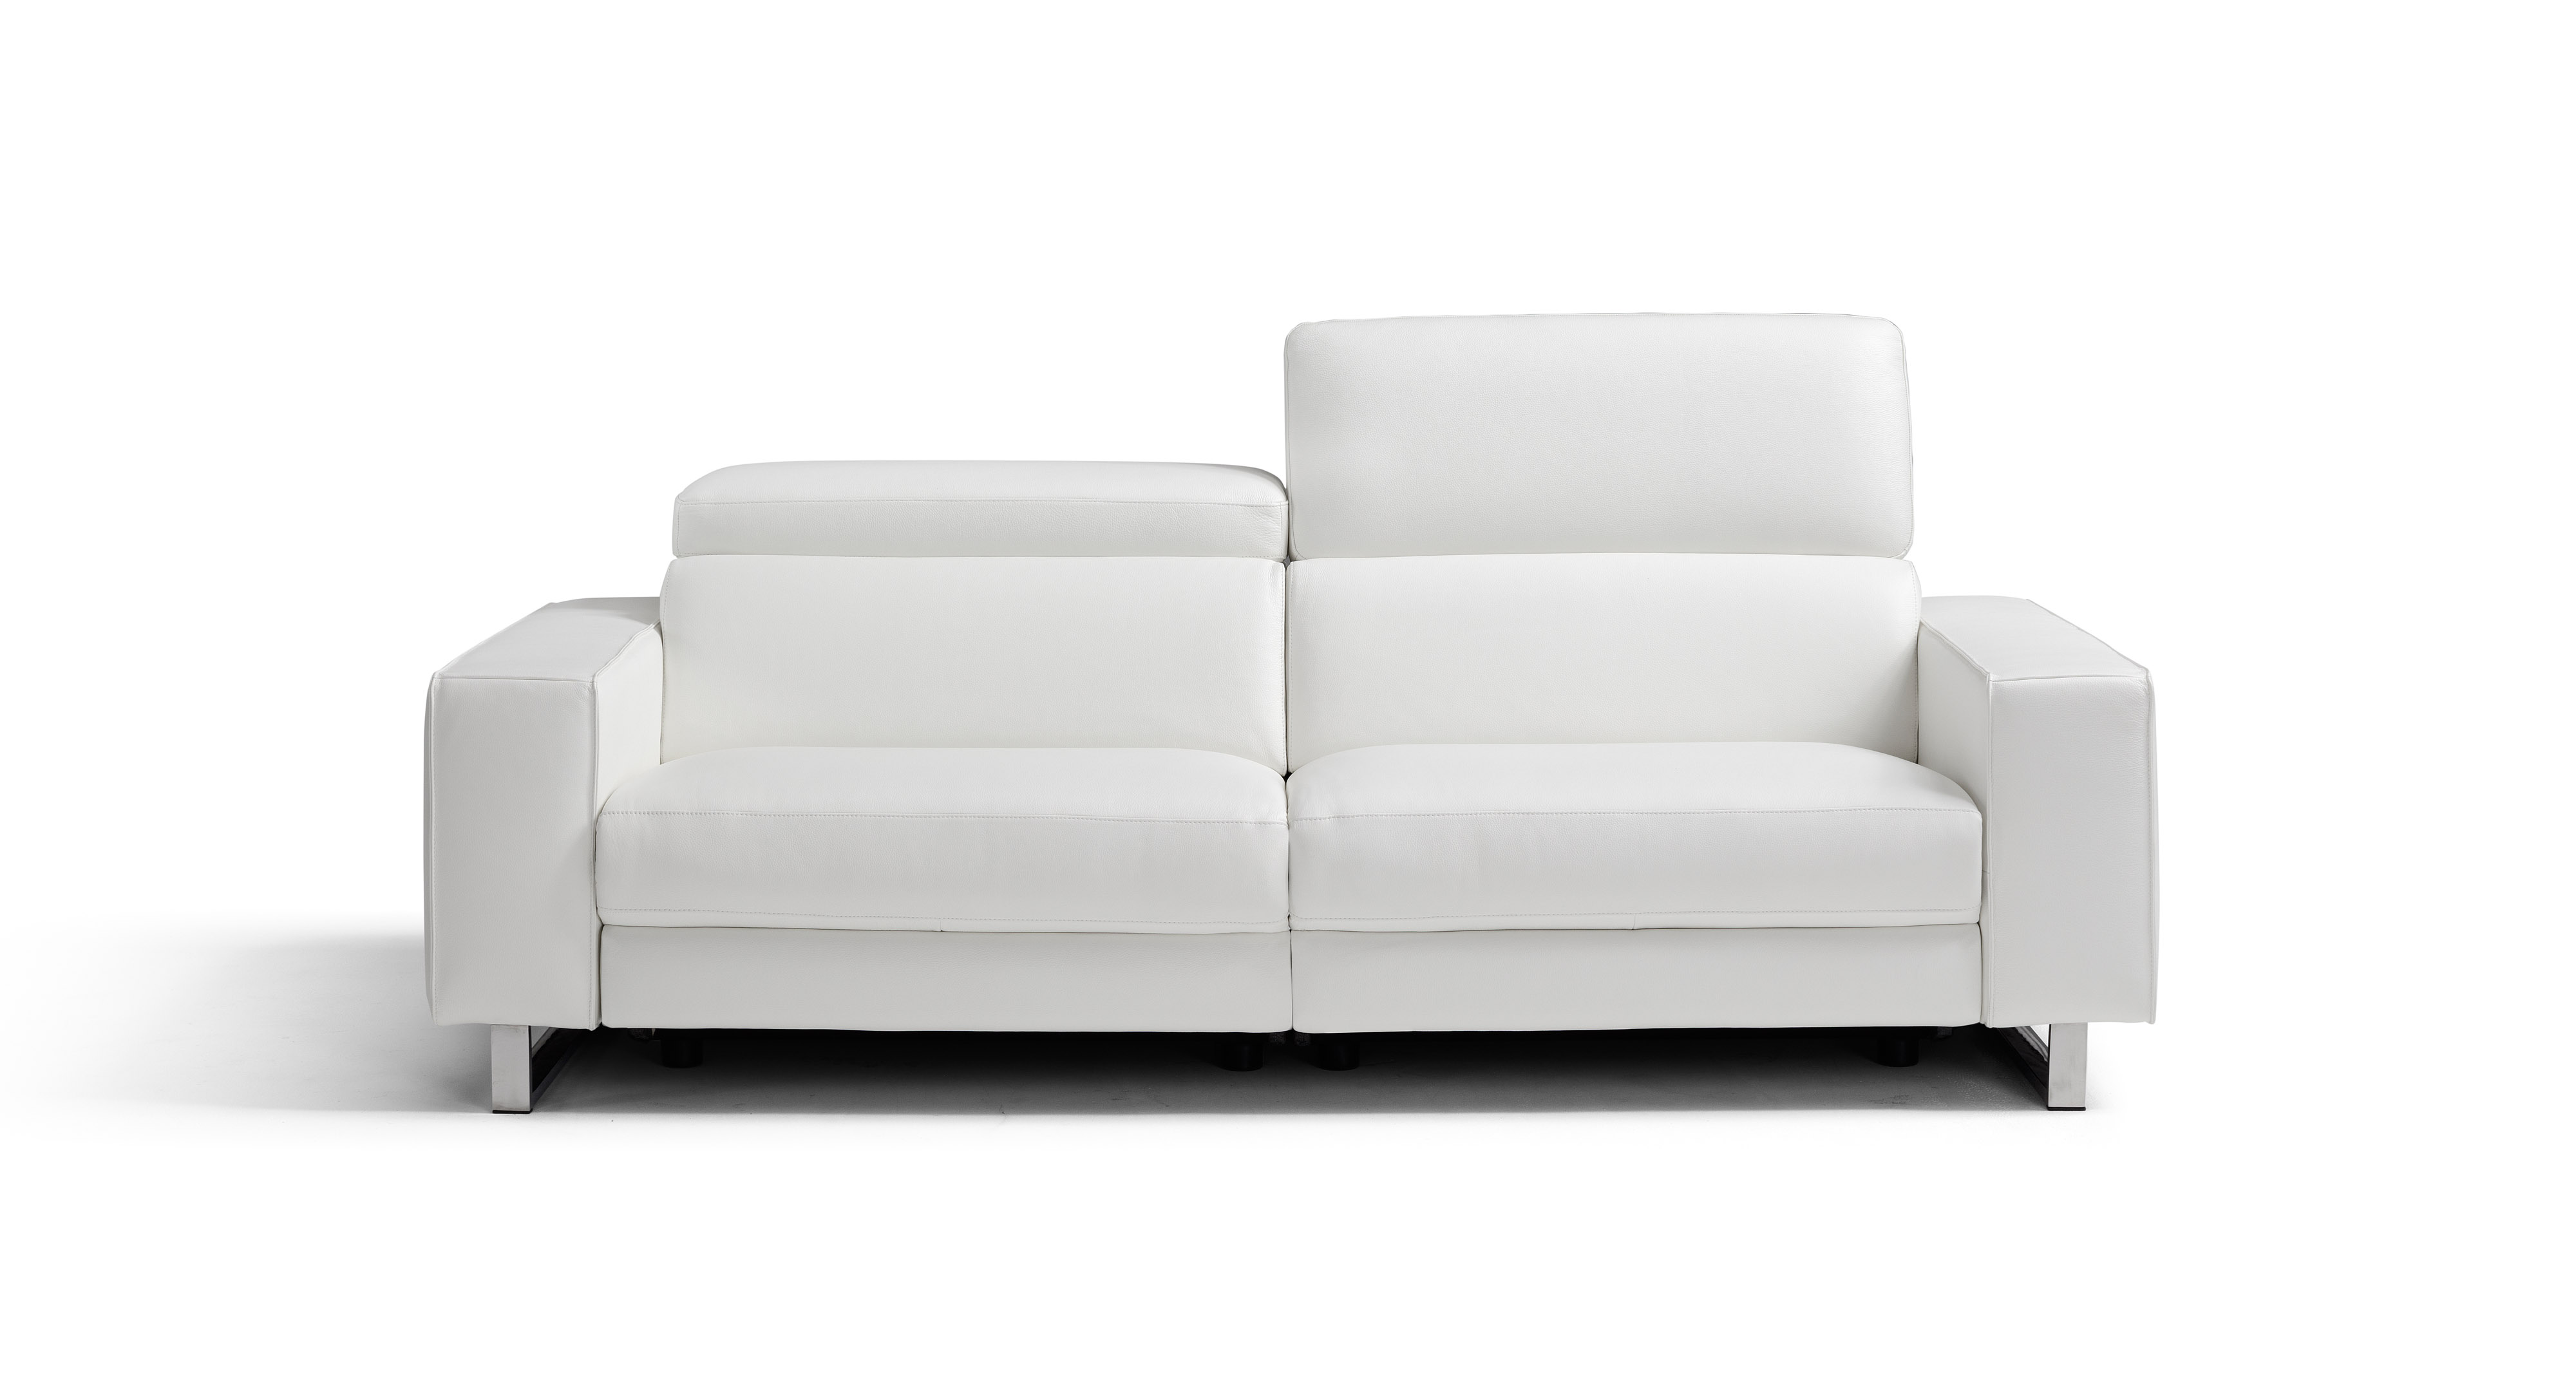 dama reina white leather sofa